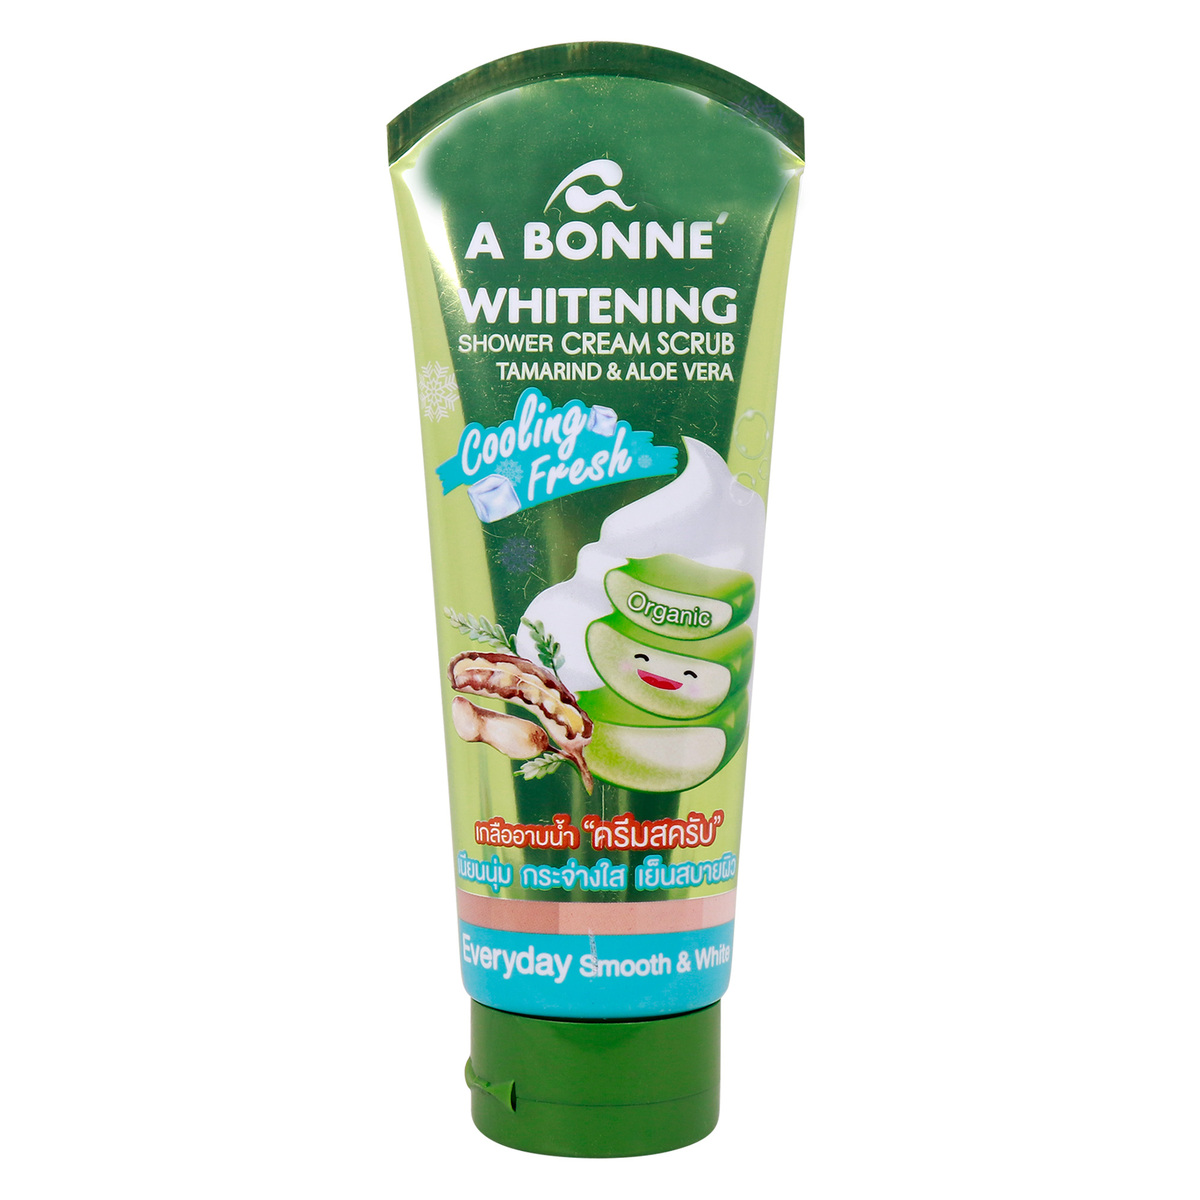 A Bonne Whitening Shower Cream Scrub Tamarind and Aloe Vera, 350 g